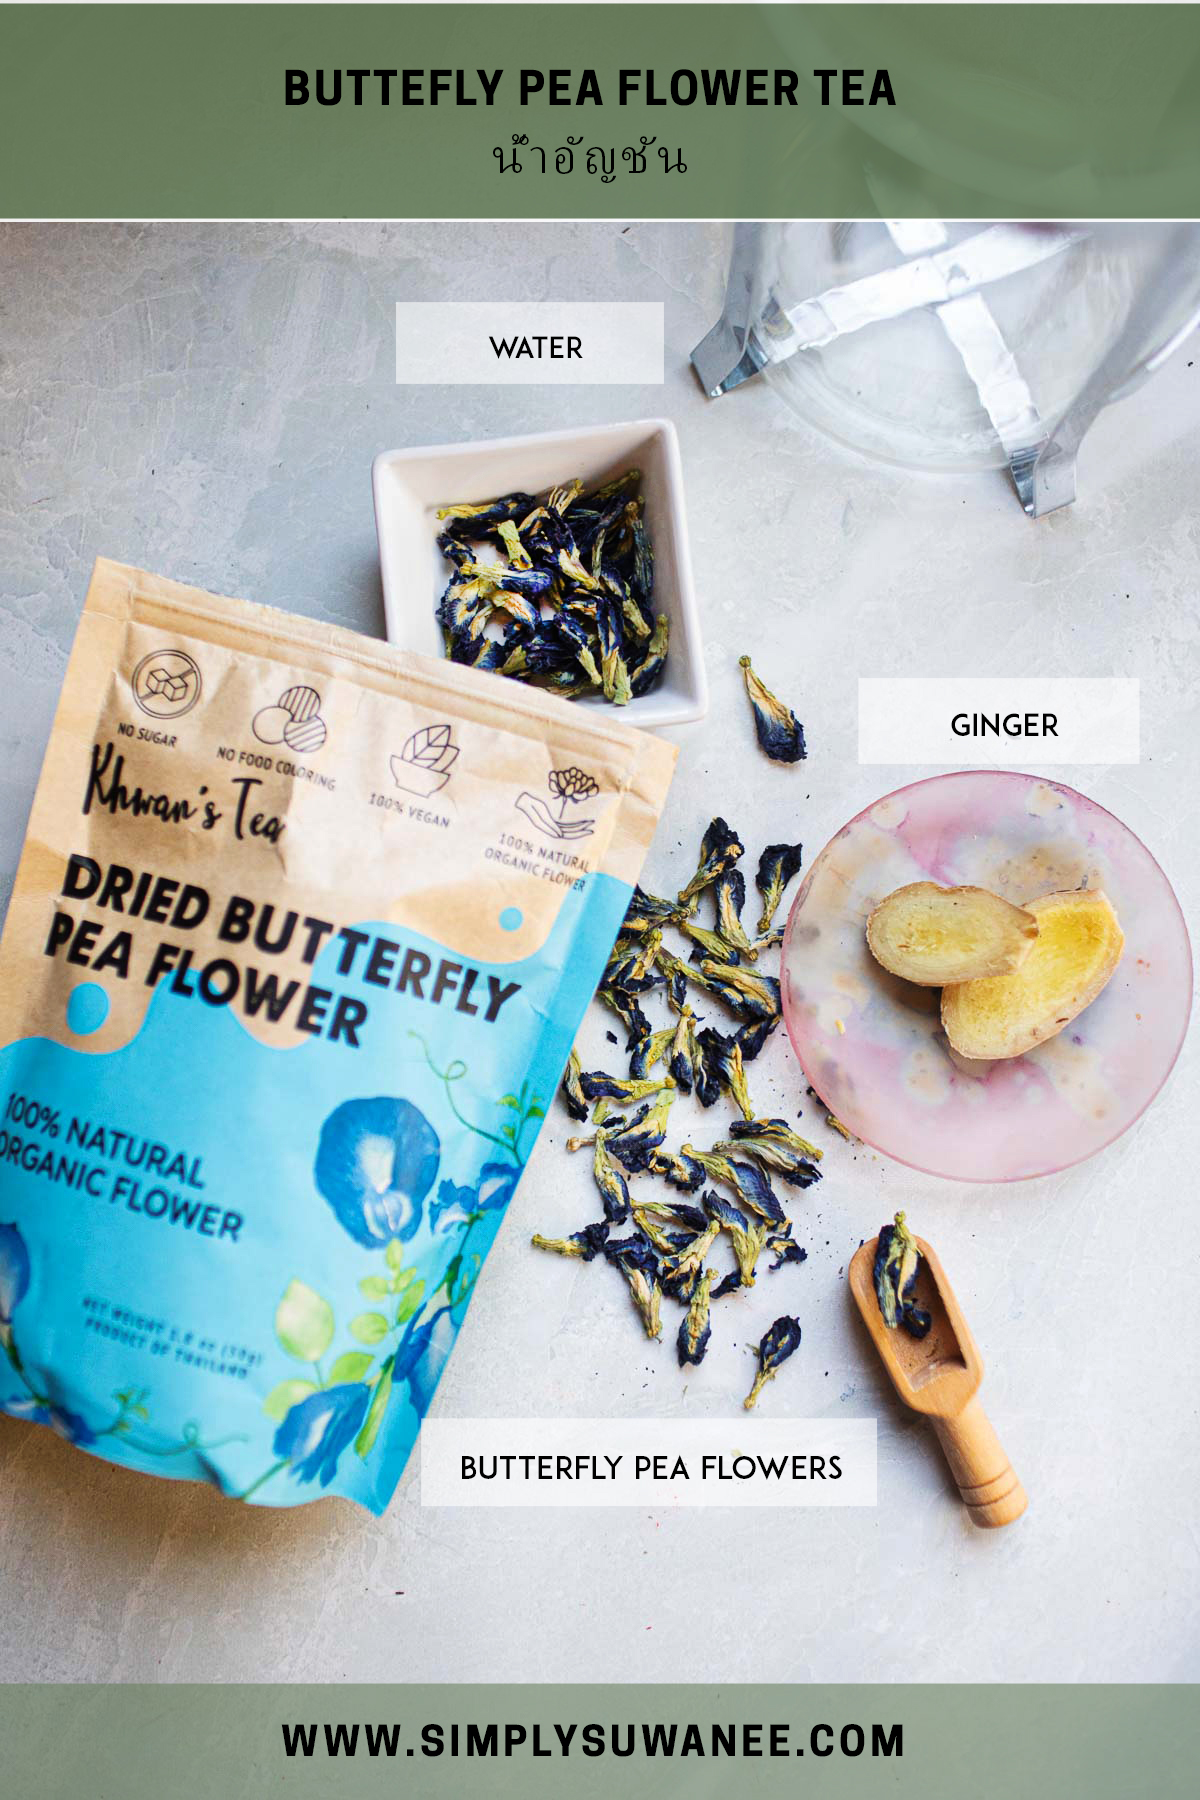 How To Make Thai Butterfly Blue Tea (น้ำอัญชัน) - Simply Suwanee